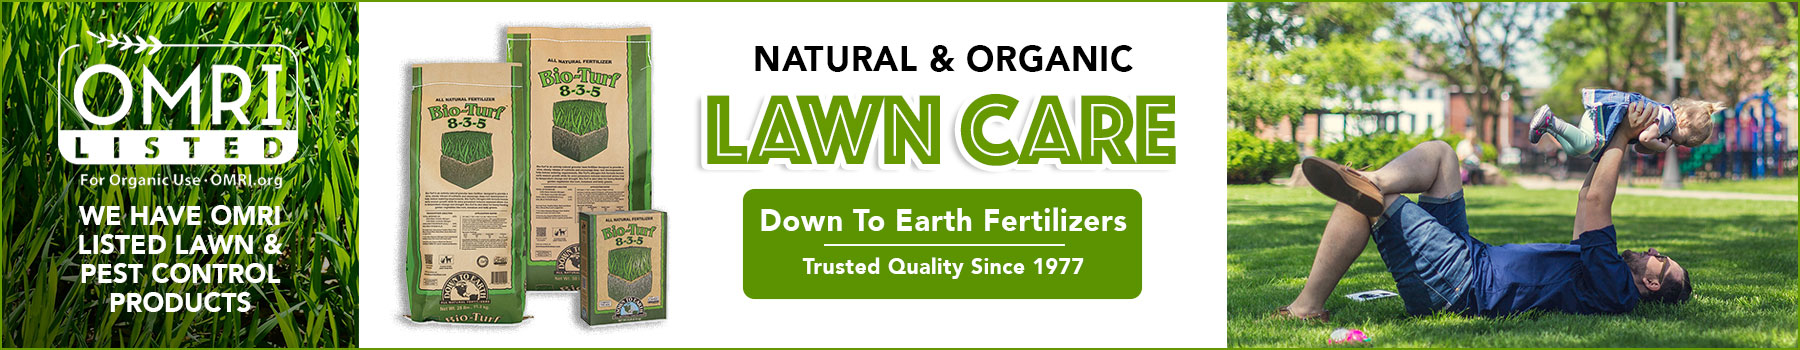 Natural Lawn Care - Organic Lawn Fertilizer